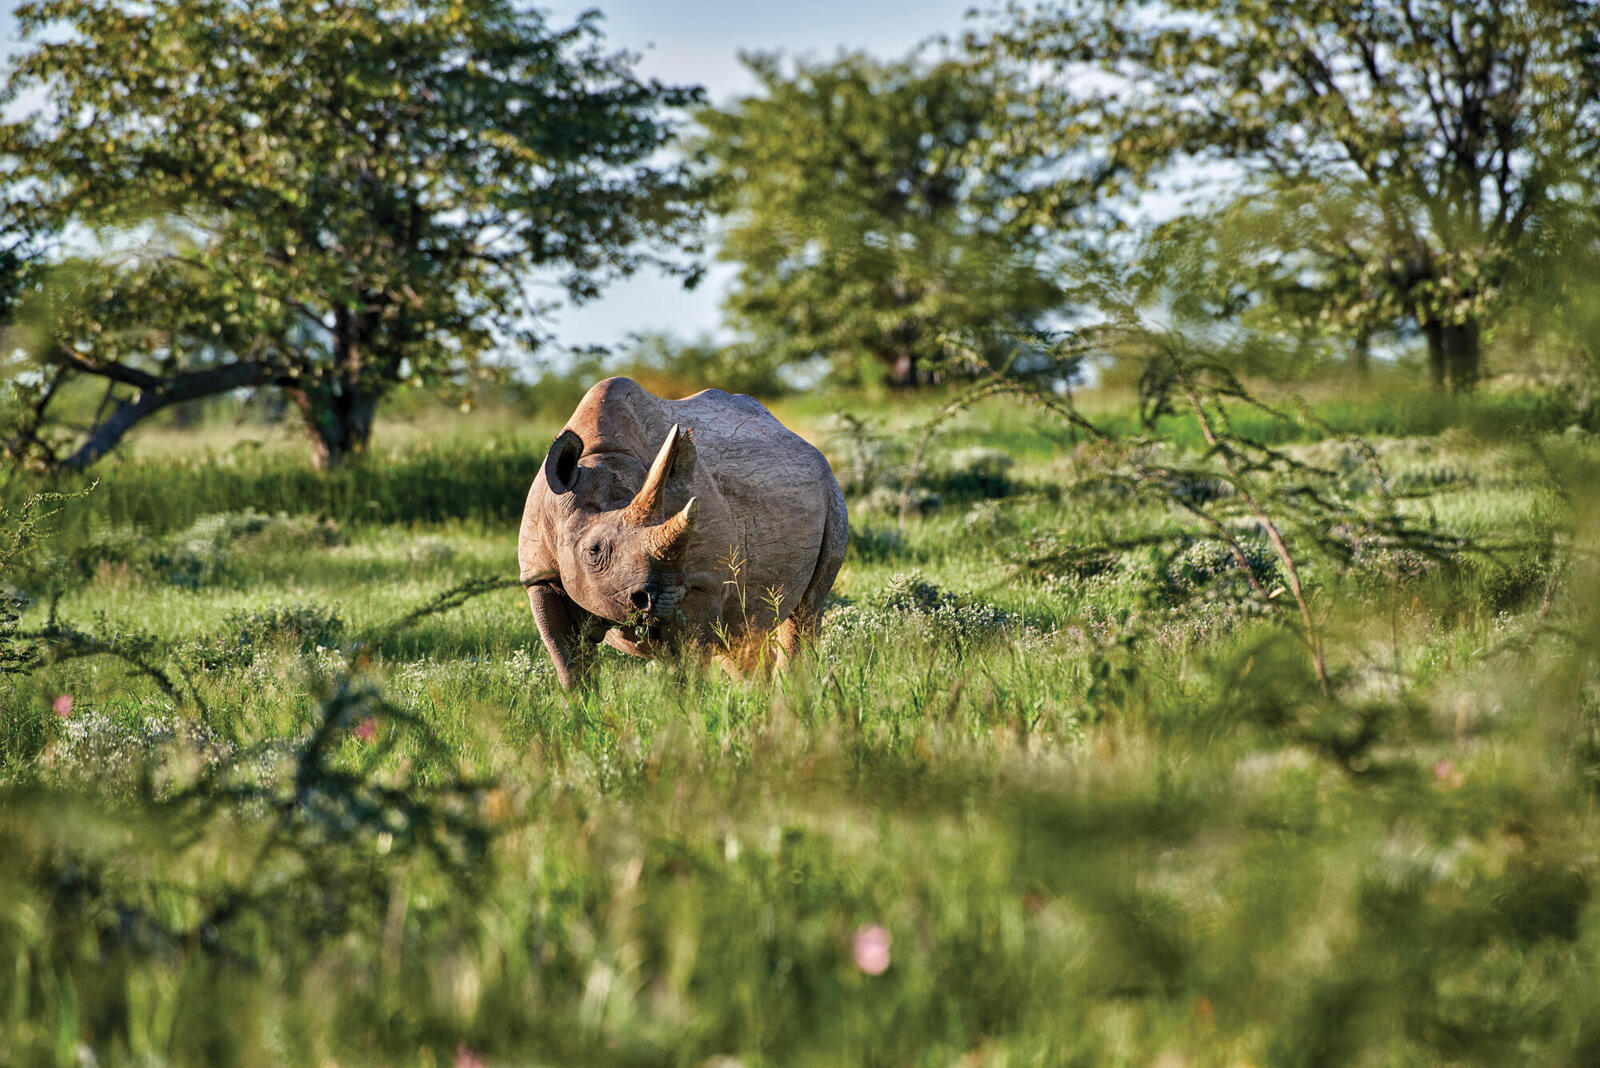 Rhino surrounded by vegetation